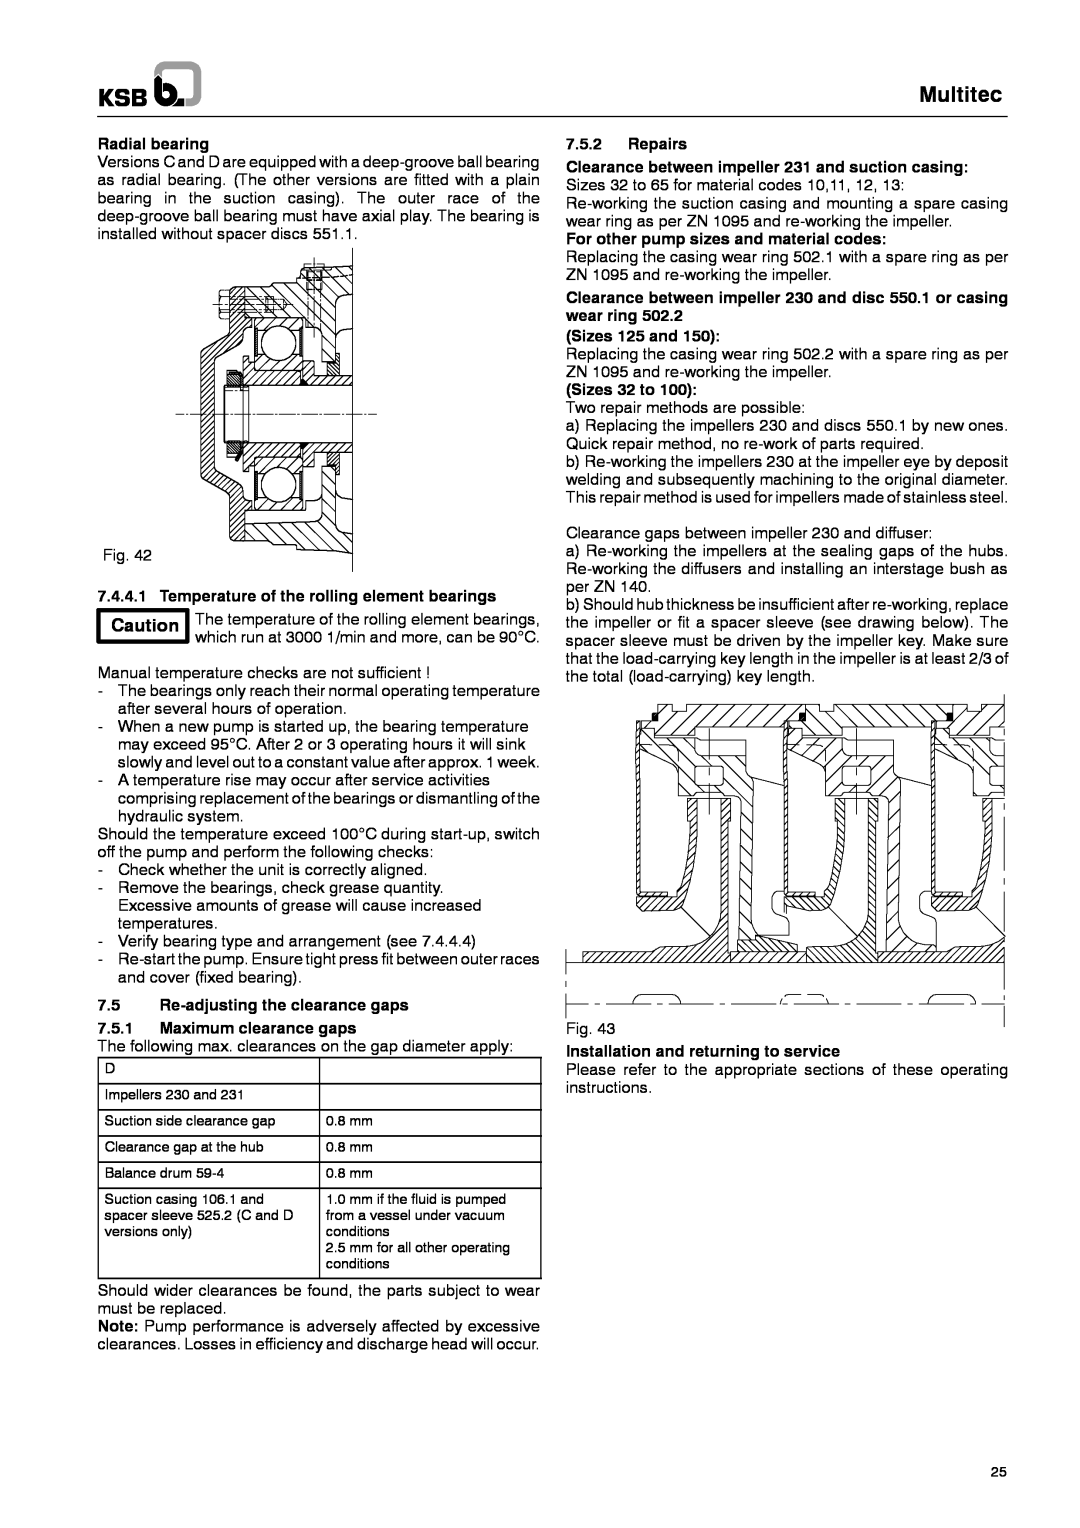 Multitech 1777.8/7-10 G3 operating instructions Multitec, Radial bearing 